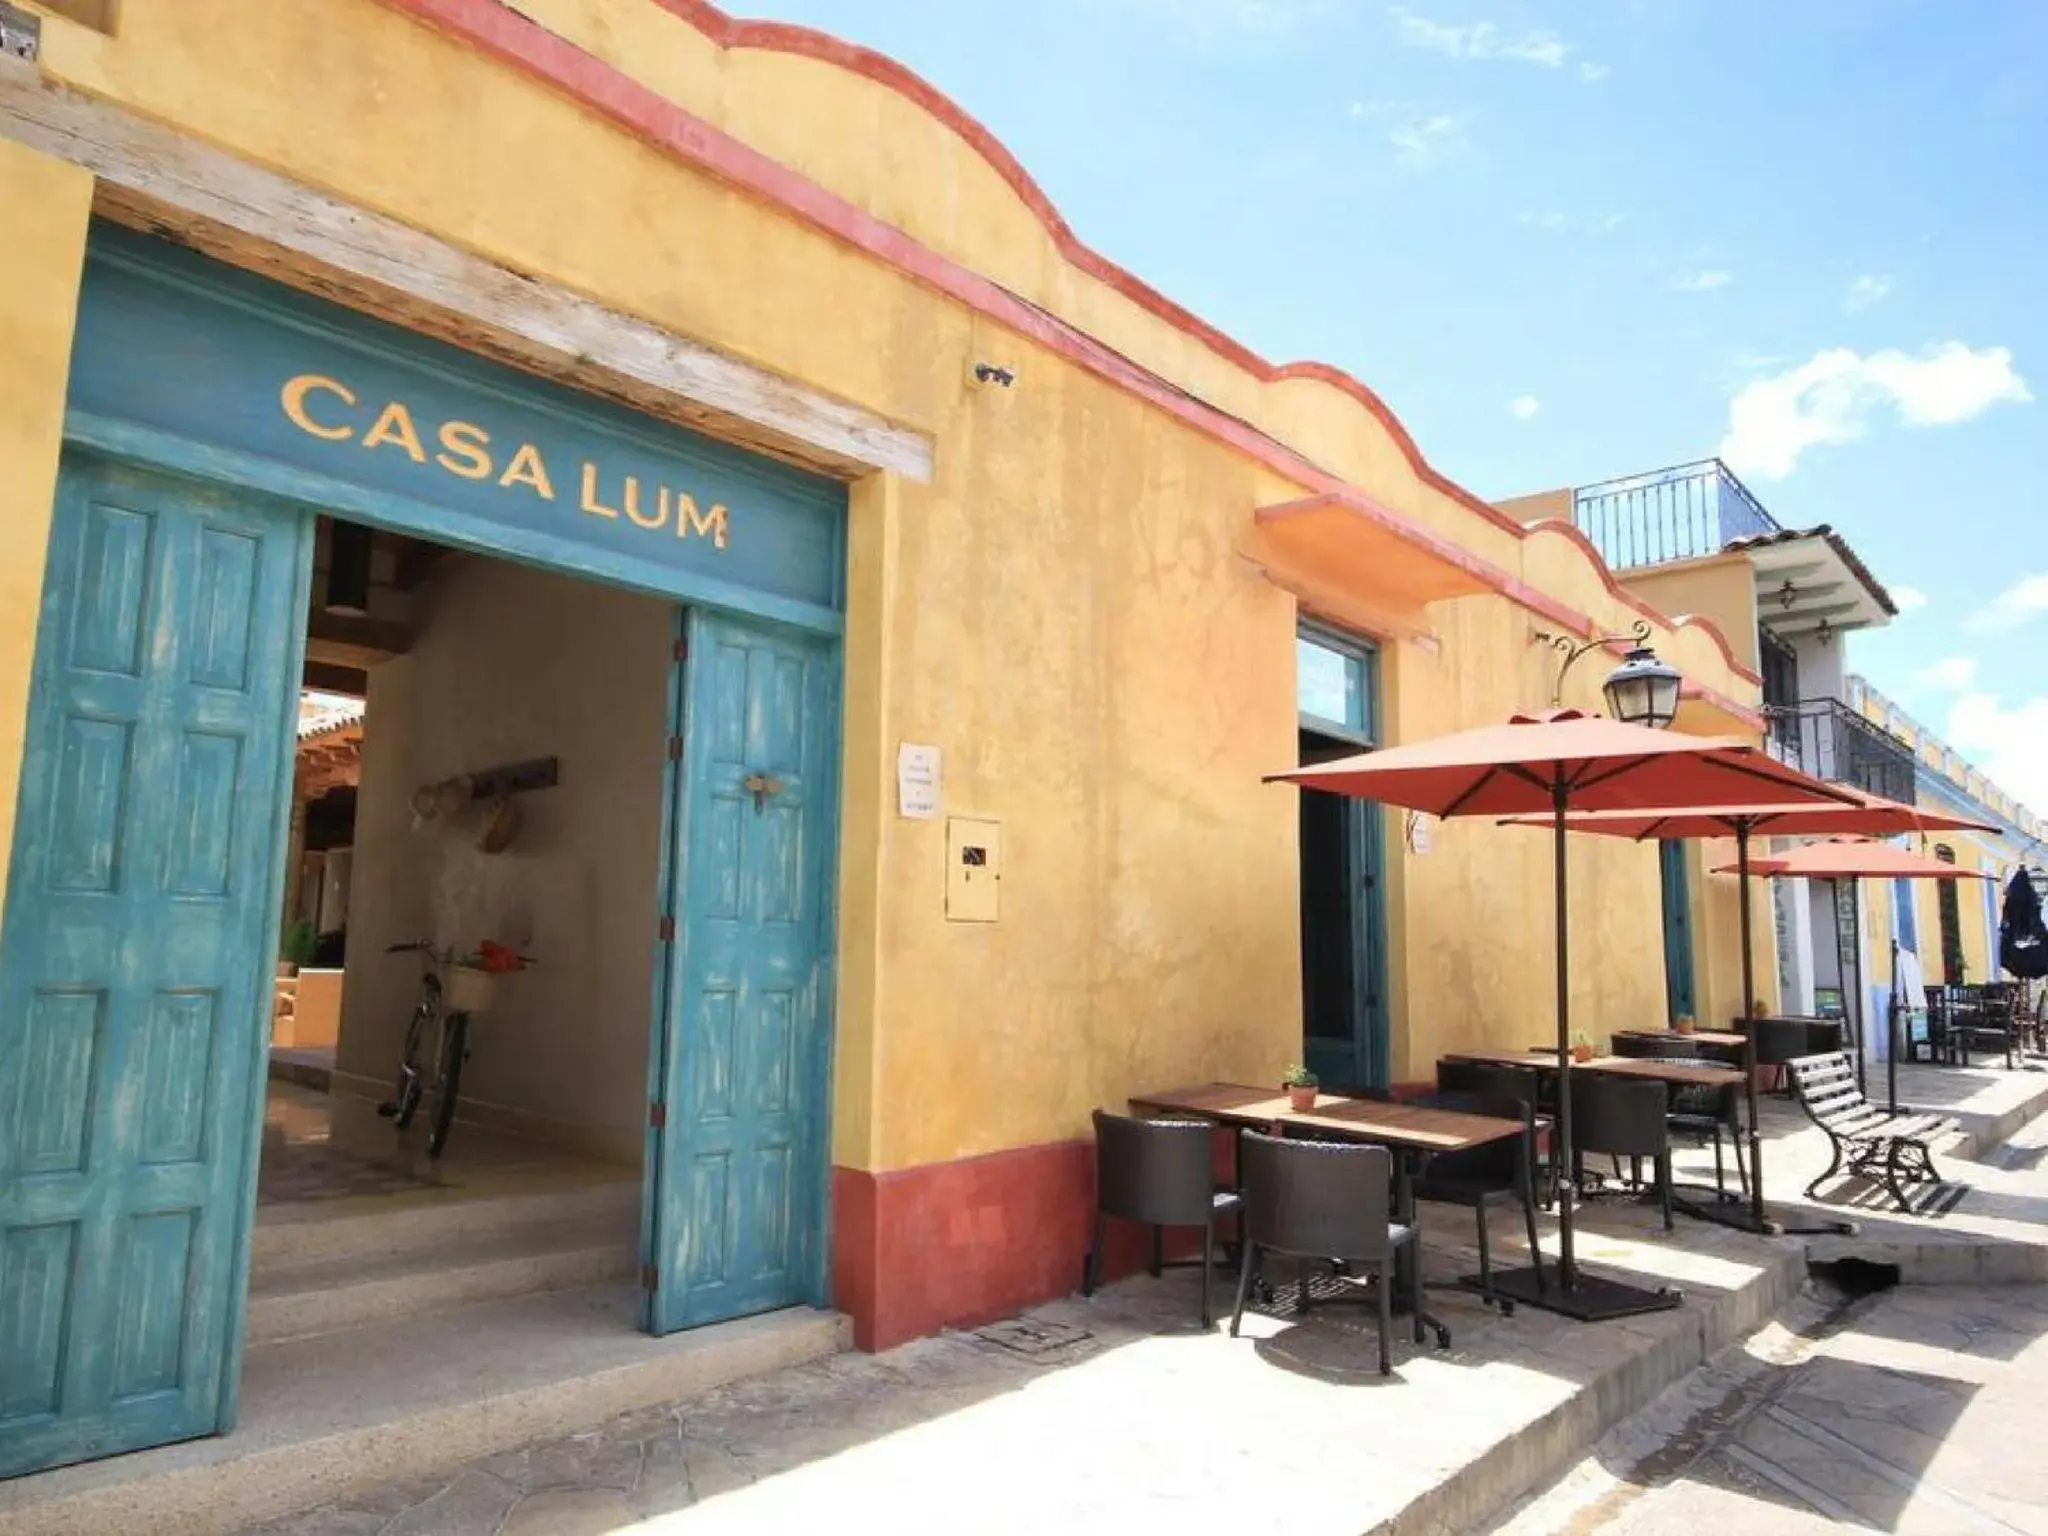 Nearby landmark in Casa Lum